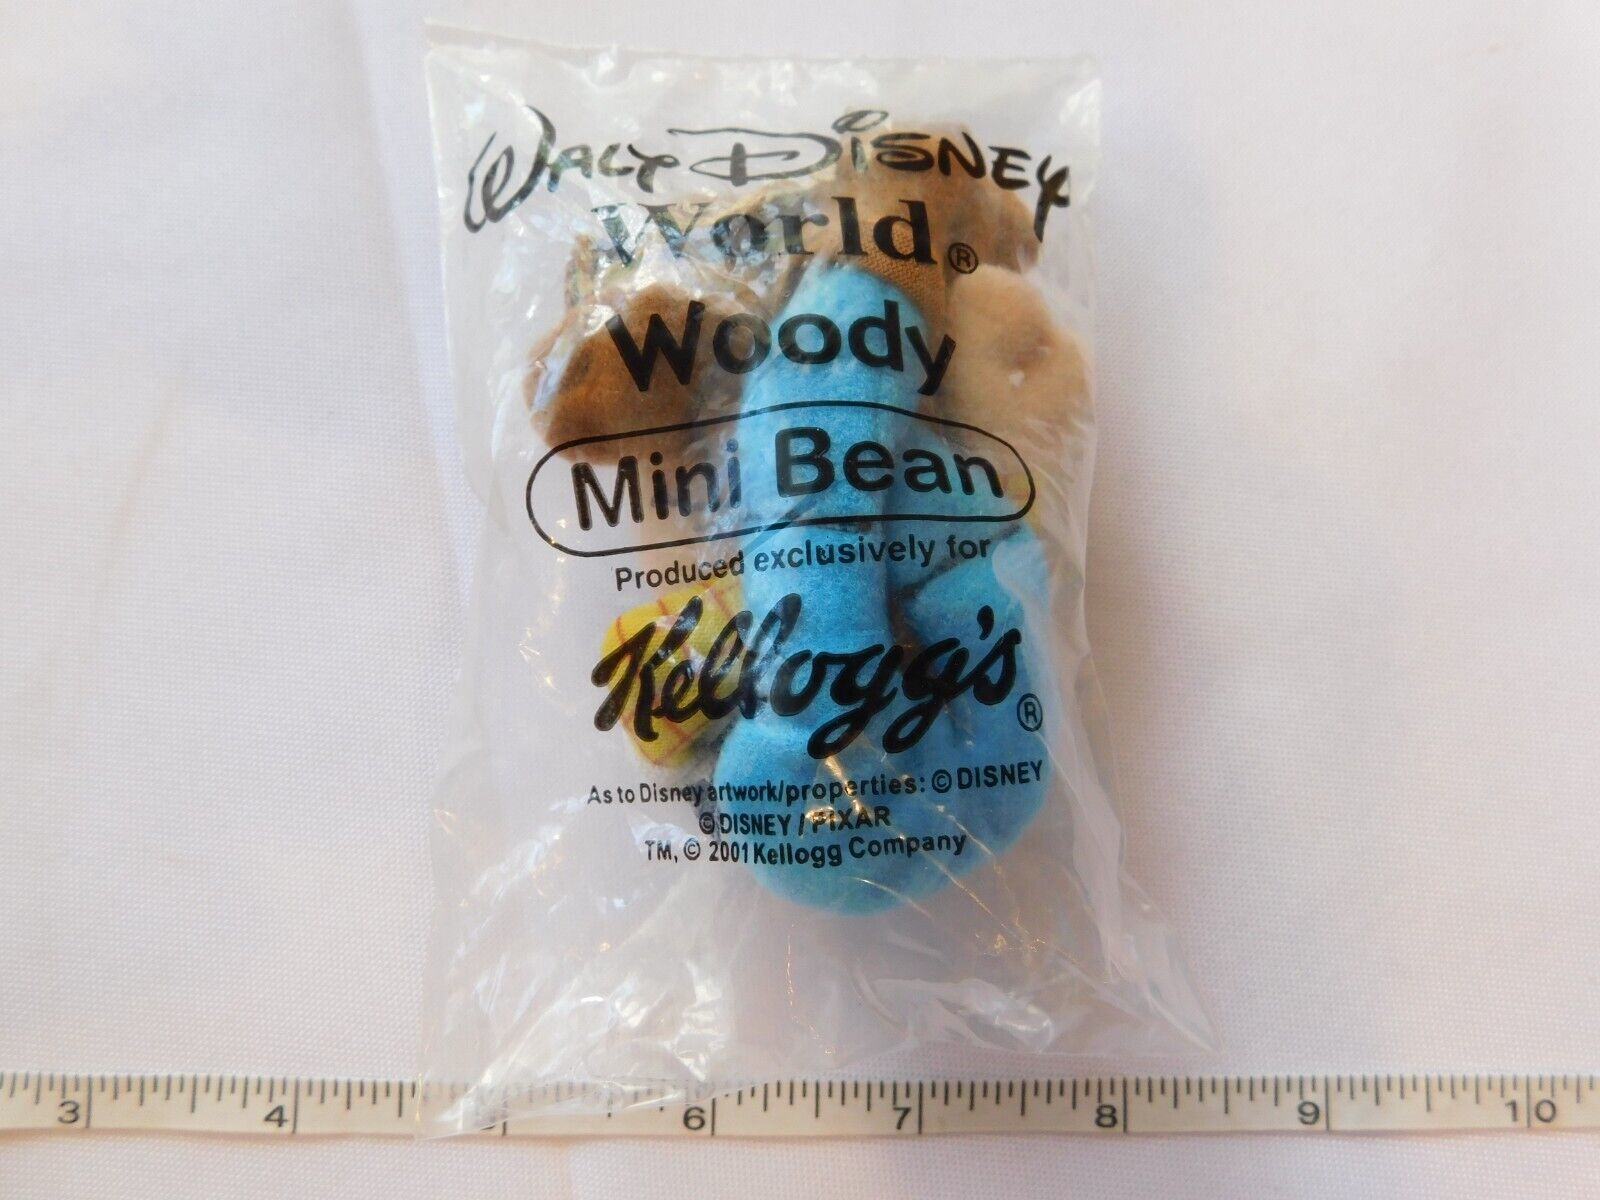 Walt Disney World Woody Mini Bean Kellogg's Beanie Stuffed Woody Collectible NEW - $15.43